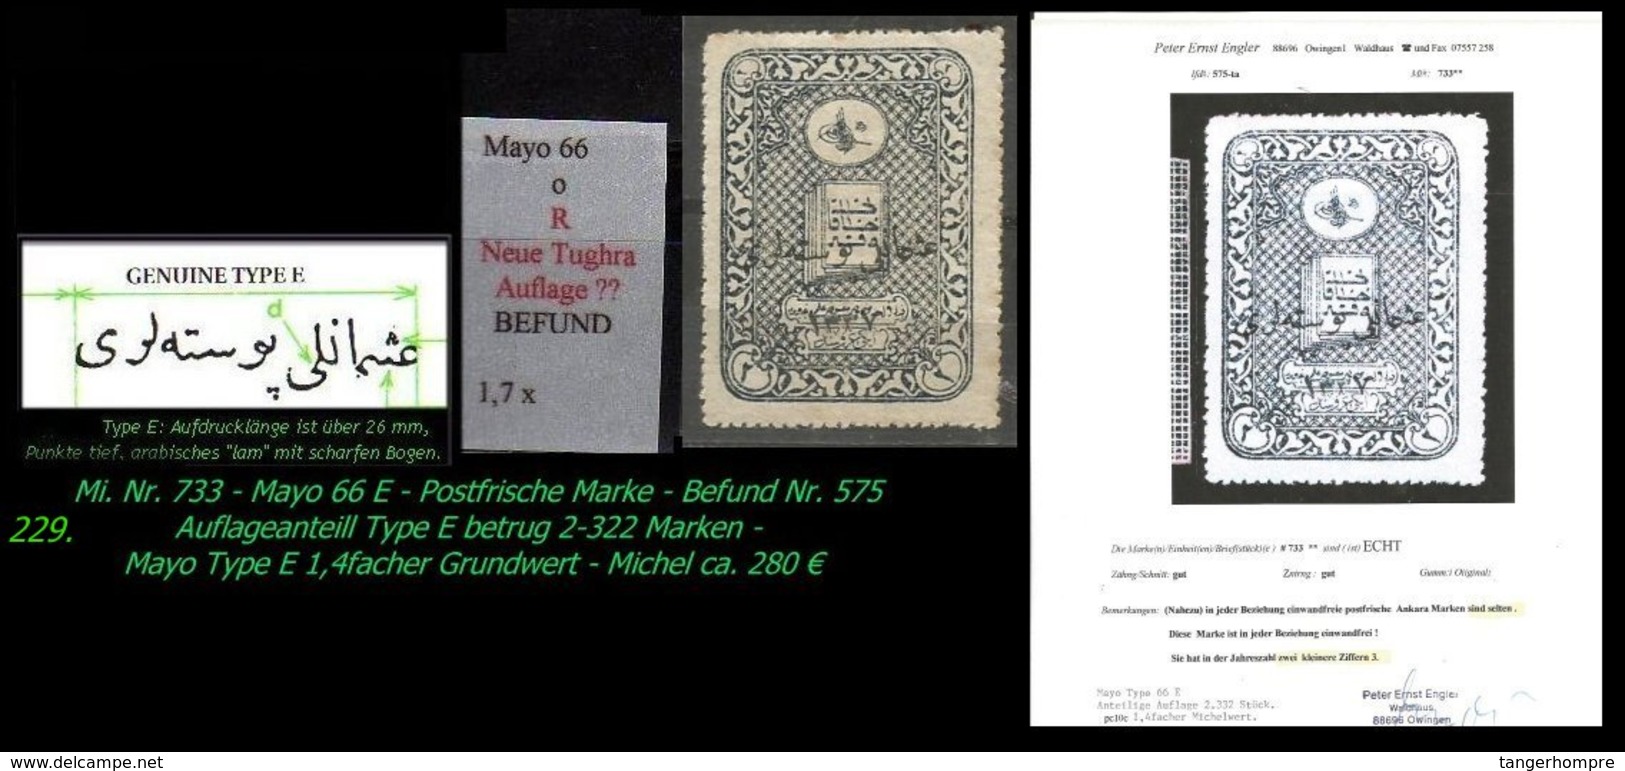 EARLY OTTOMAN SPECIALIZED FOR SPECIALIST, SEE...Mi. Nr. 733 - Mayo 66 E - Auflagenanteil 2.322 Stück - 1920-21 Kleinasien